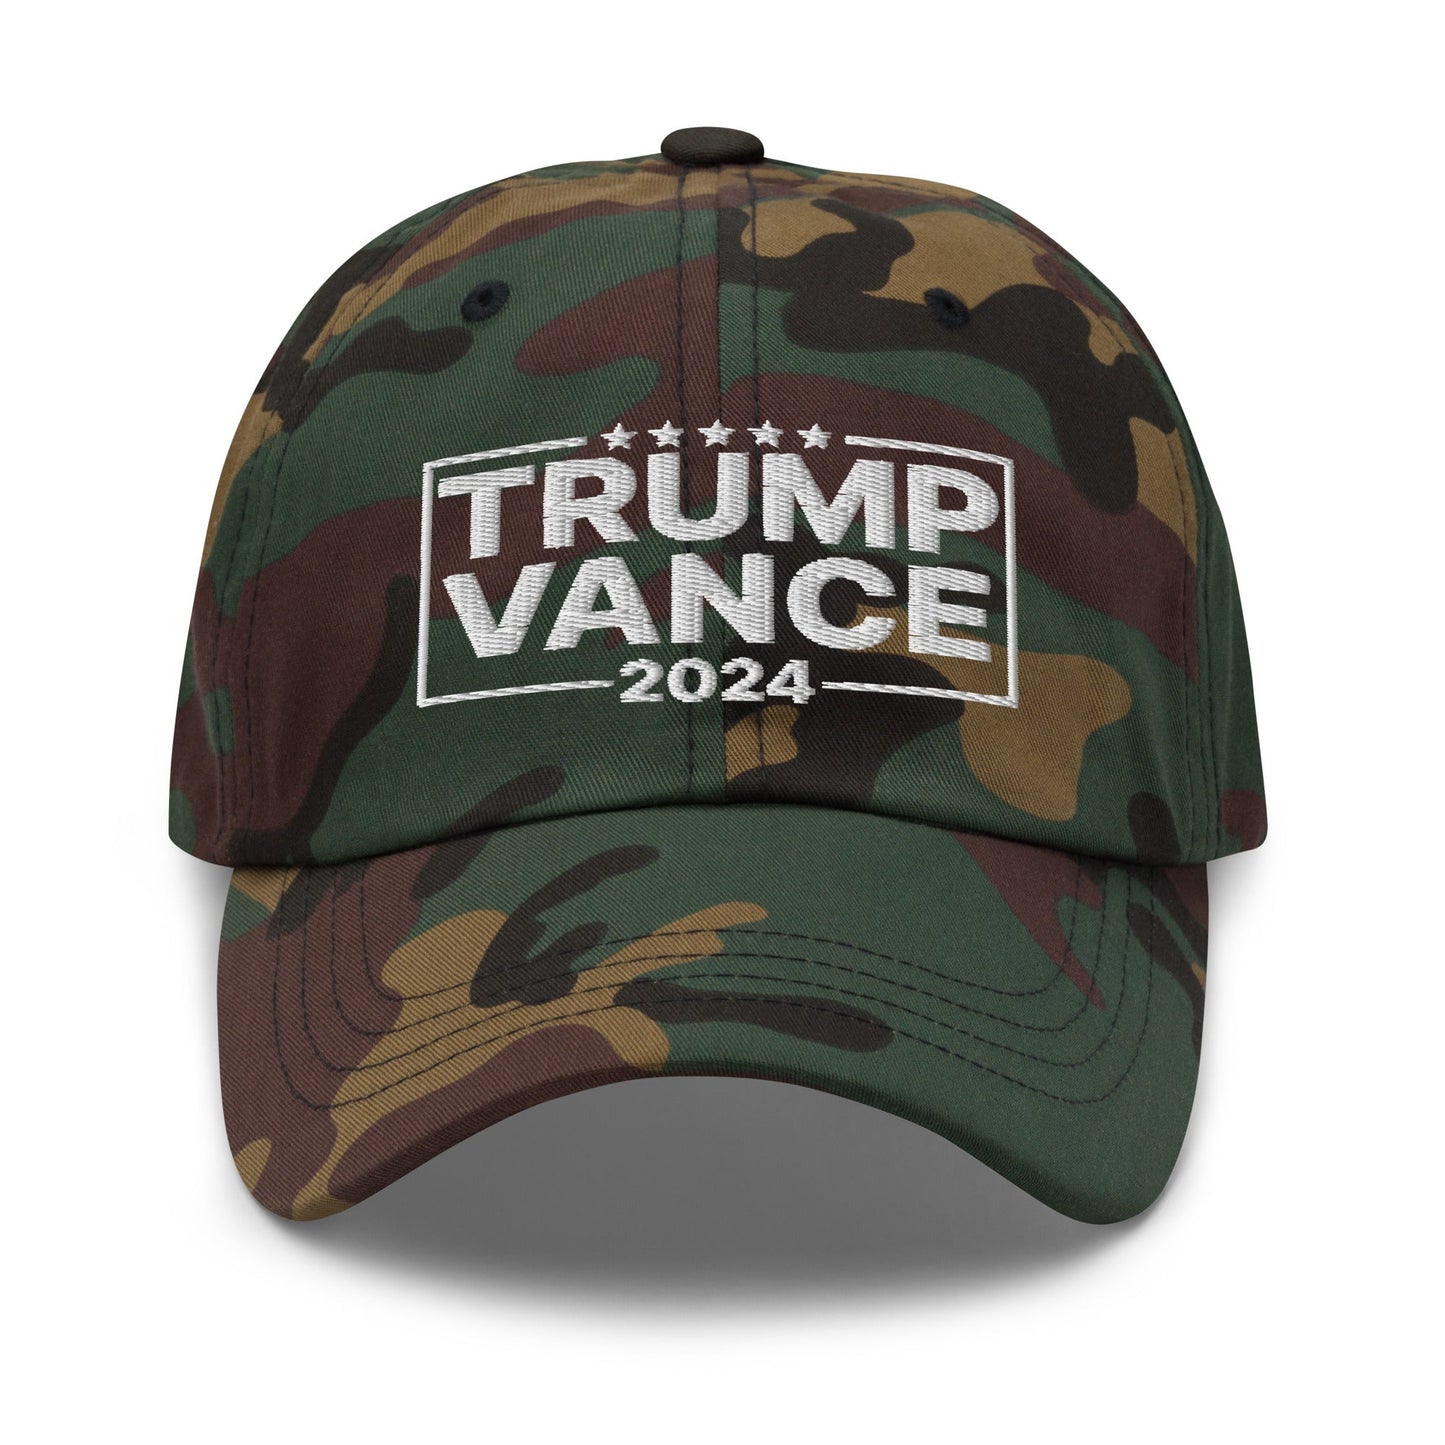 Trump Vance 2024 Dad Hat Green Camo